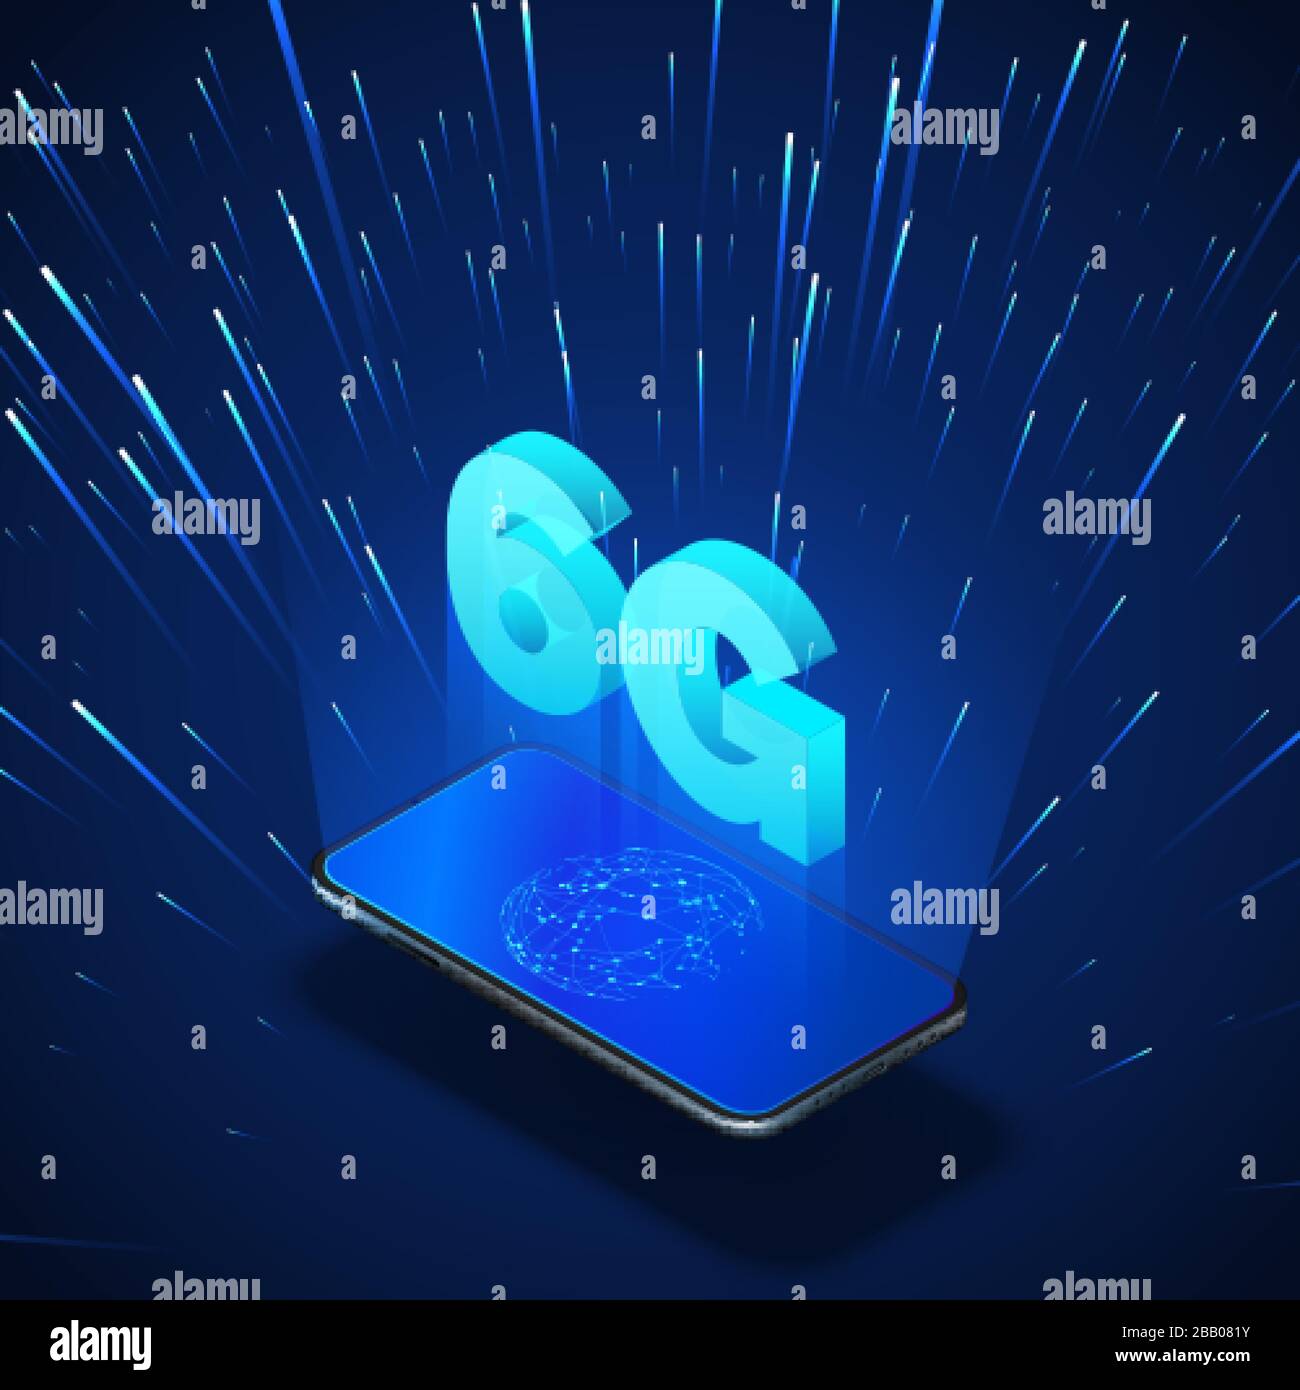 Schnelle, globale 6G-Mobilfunknetze. Business Isometric Illustration Smartphone mit Internet-Hologramm und Text 6g. Moderner Datentransfer. Wireless-te Stock Vektor